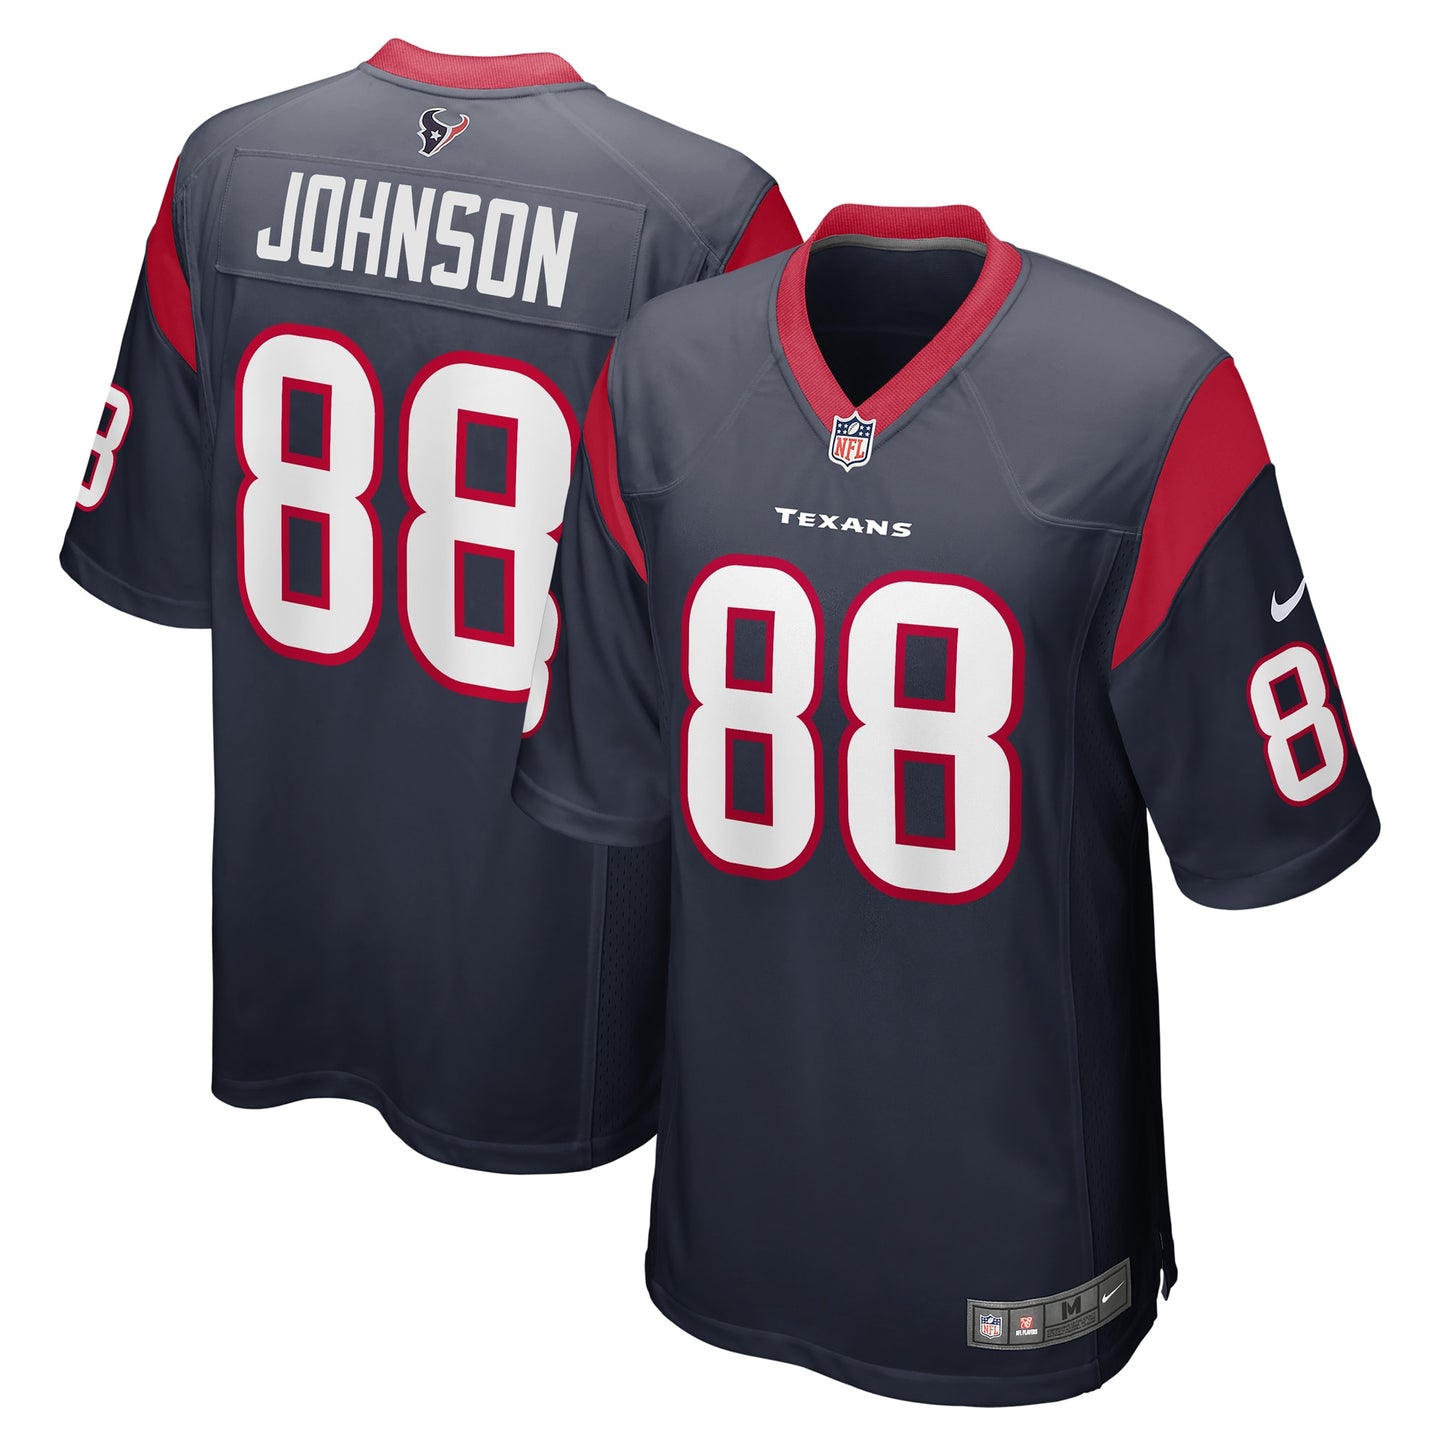 Johnny Johnson Houston Texans Nike Team Game Jersey - Navy